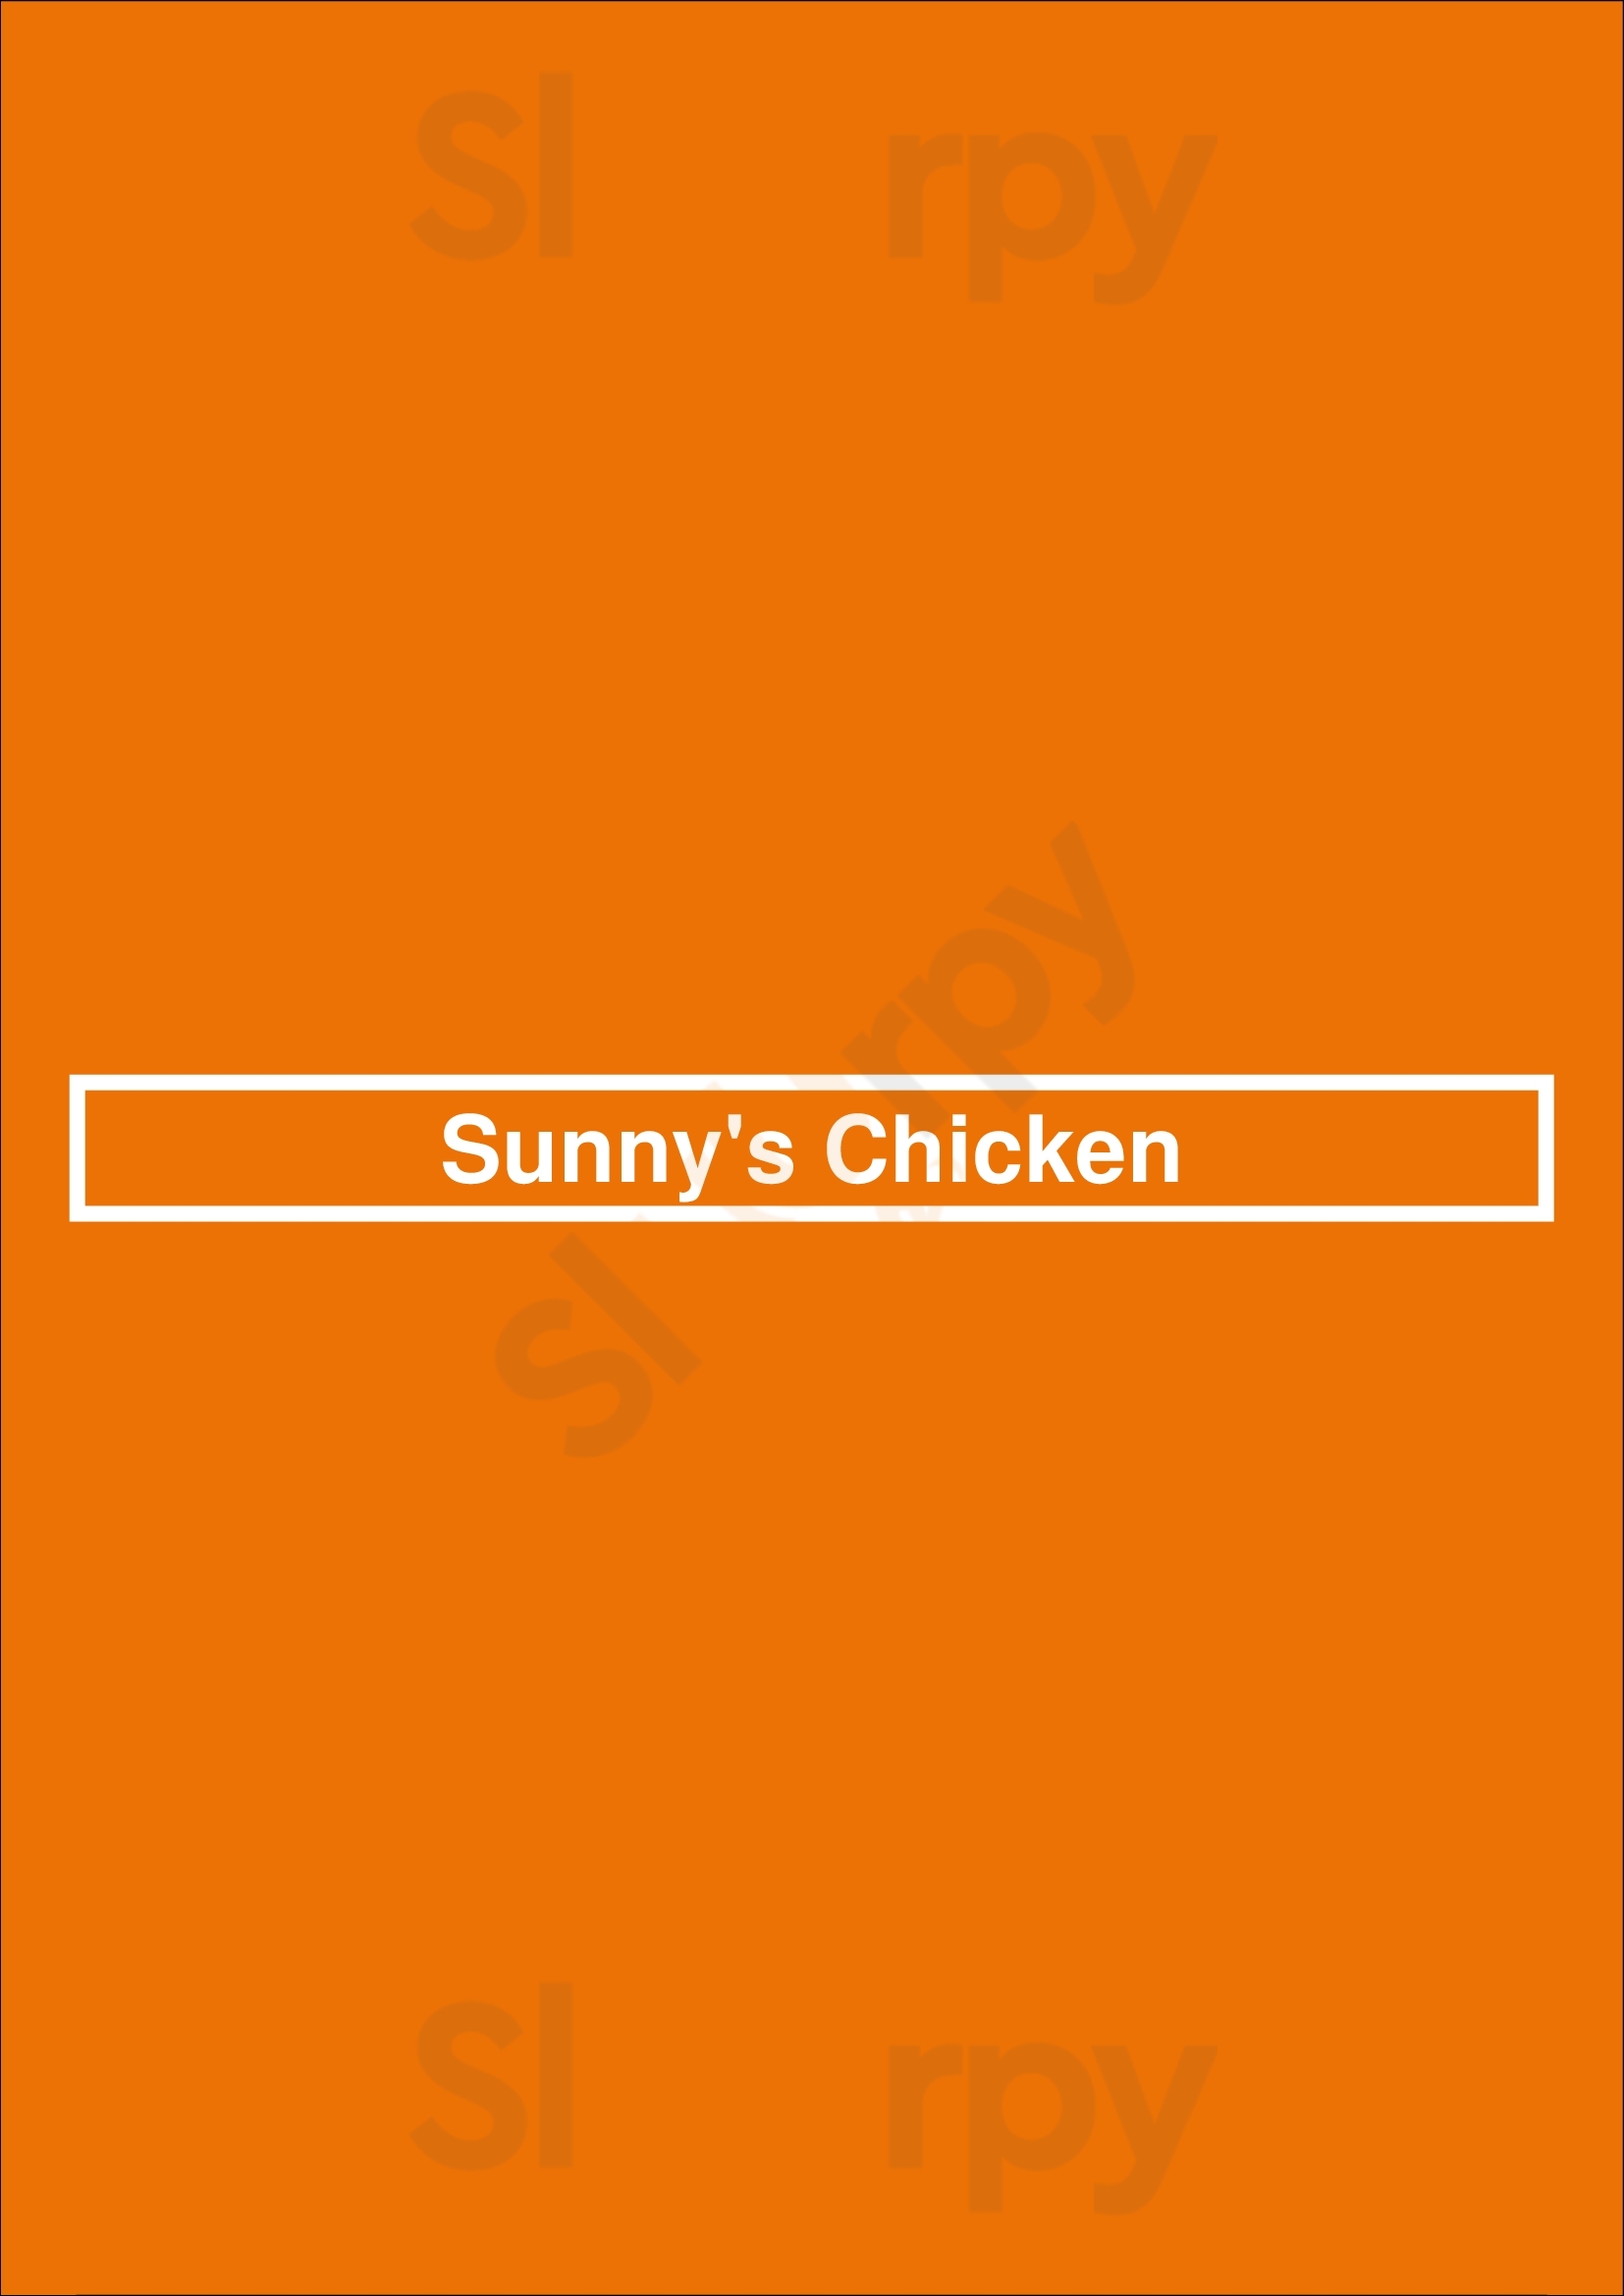 Sunny's Chicken Greenwood Menu - 1